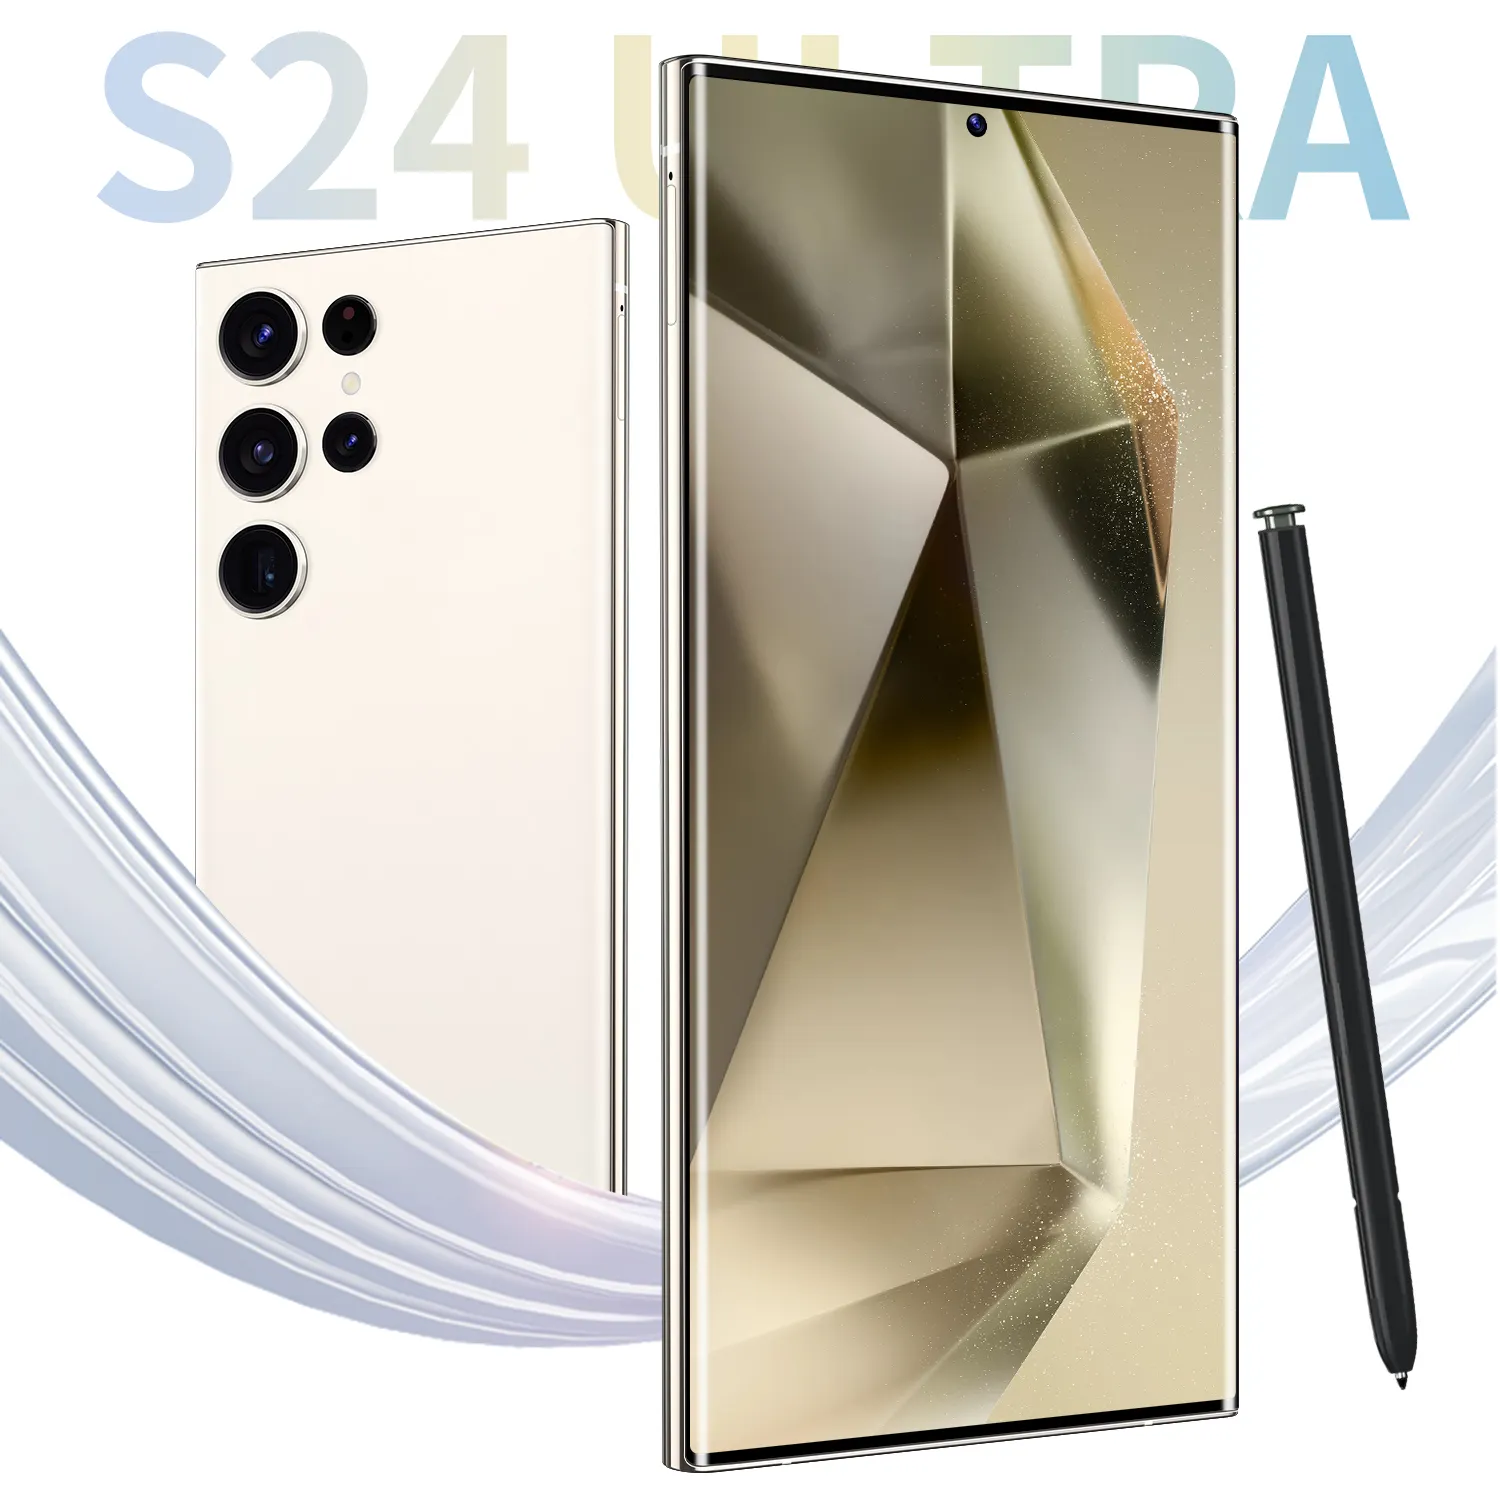 Versione globale originale S24 Ultra 5g Smartphone 6.8 pollici 3 + 64Gb Android 10 Smartphone Dual Sim telefoni cellulari intelligenti